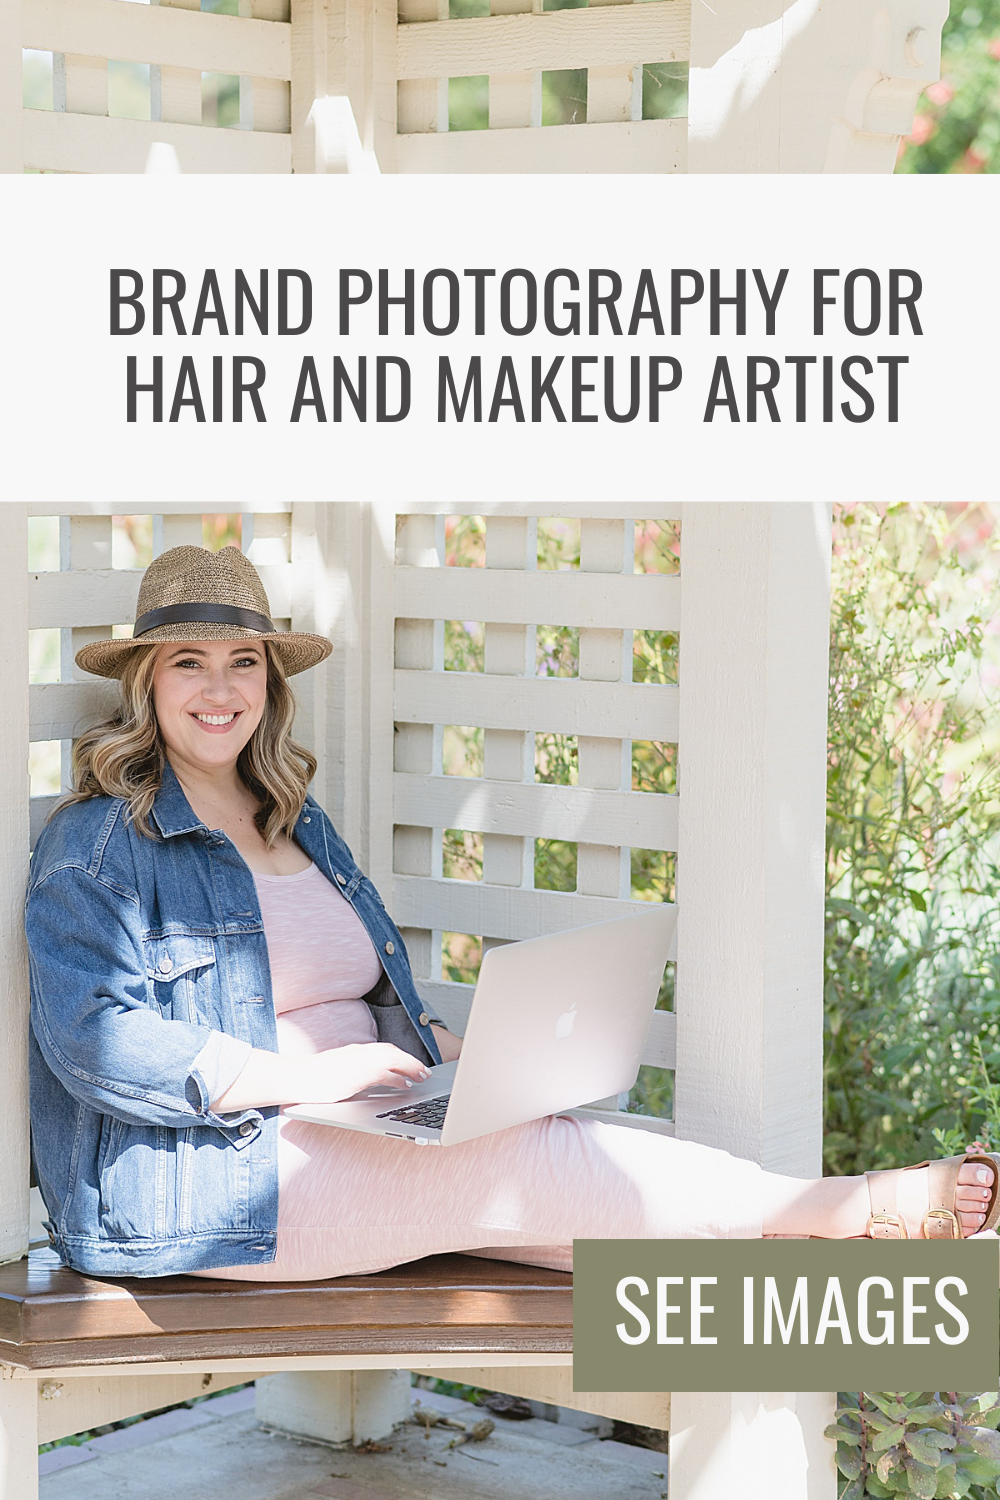 Branding photos of makeup and hair artist Kim Baker Gomez at Elizabeth Gamble Gardens in Palo Alto California by Jen Vazquez Photography